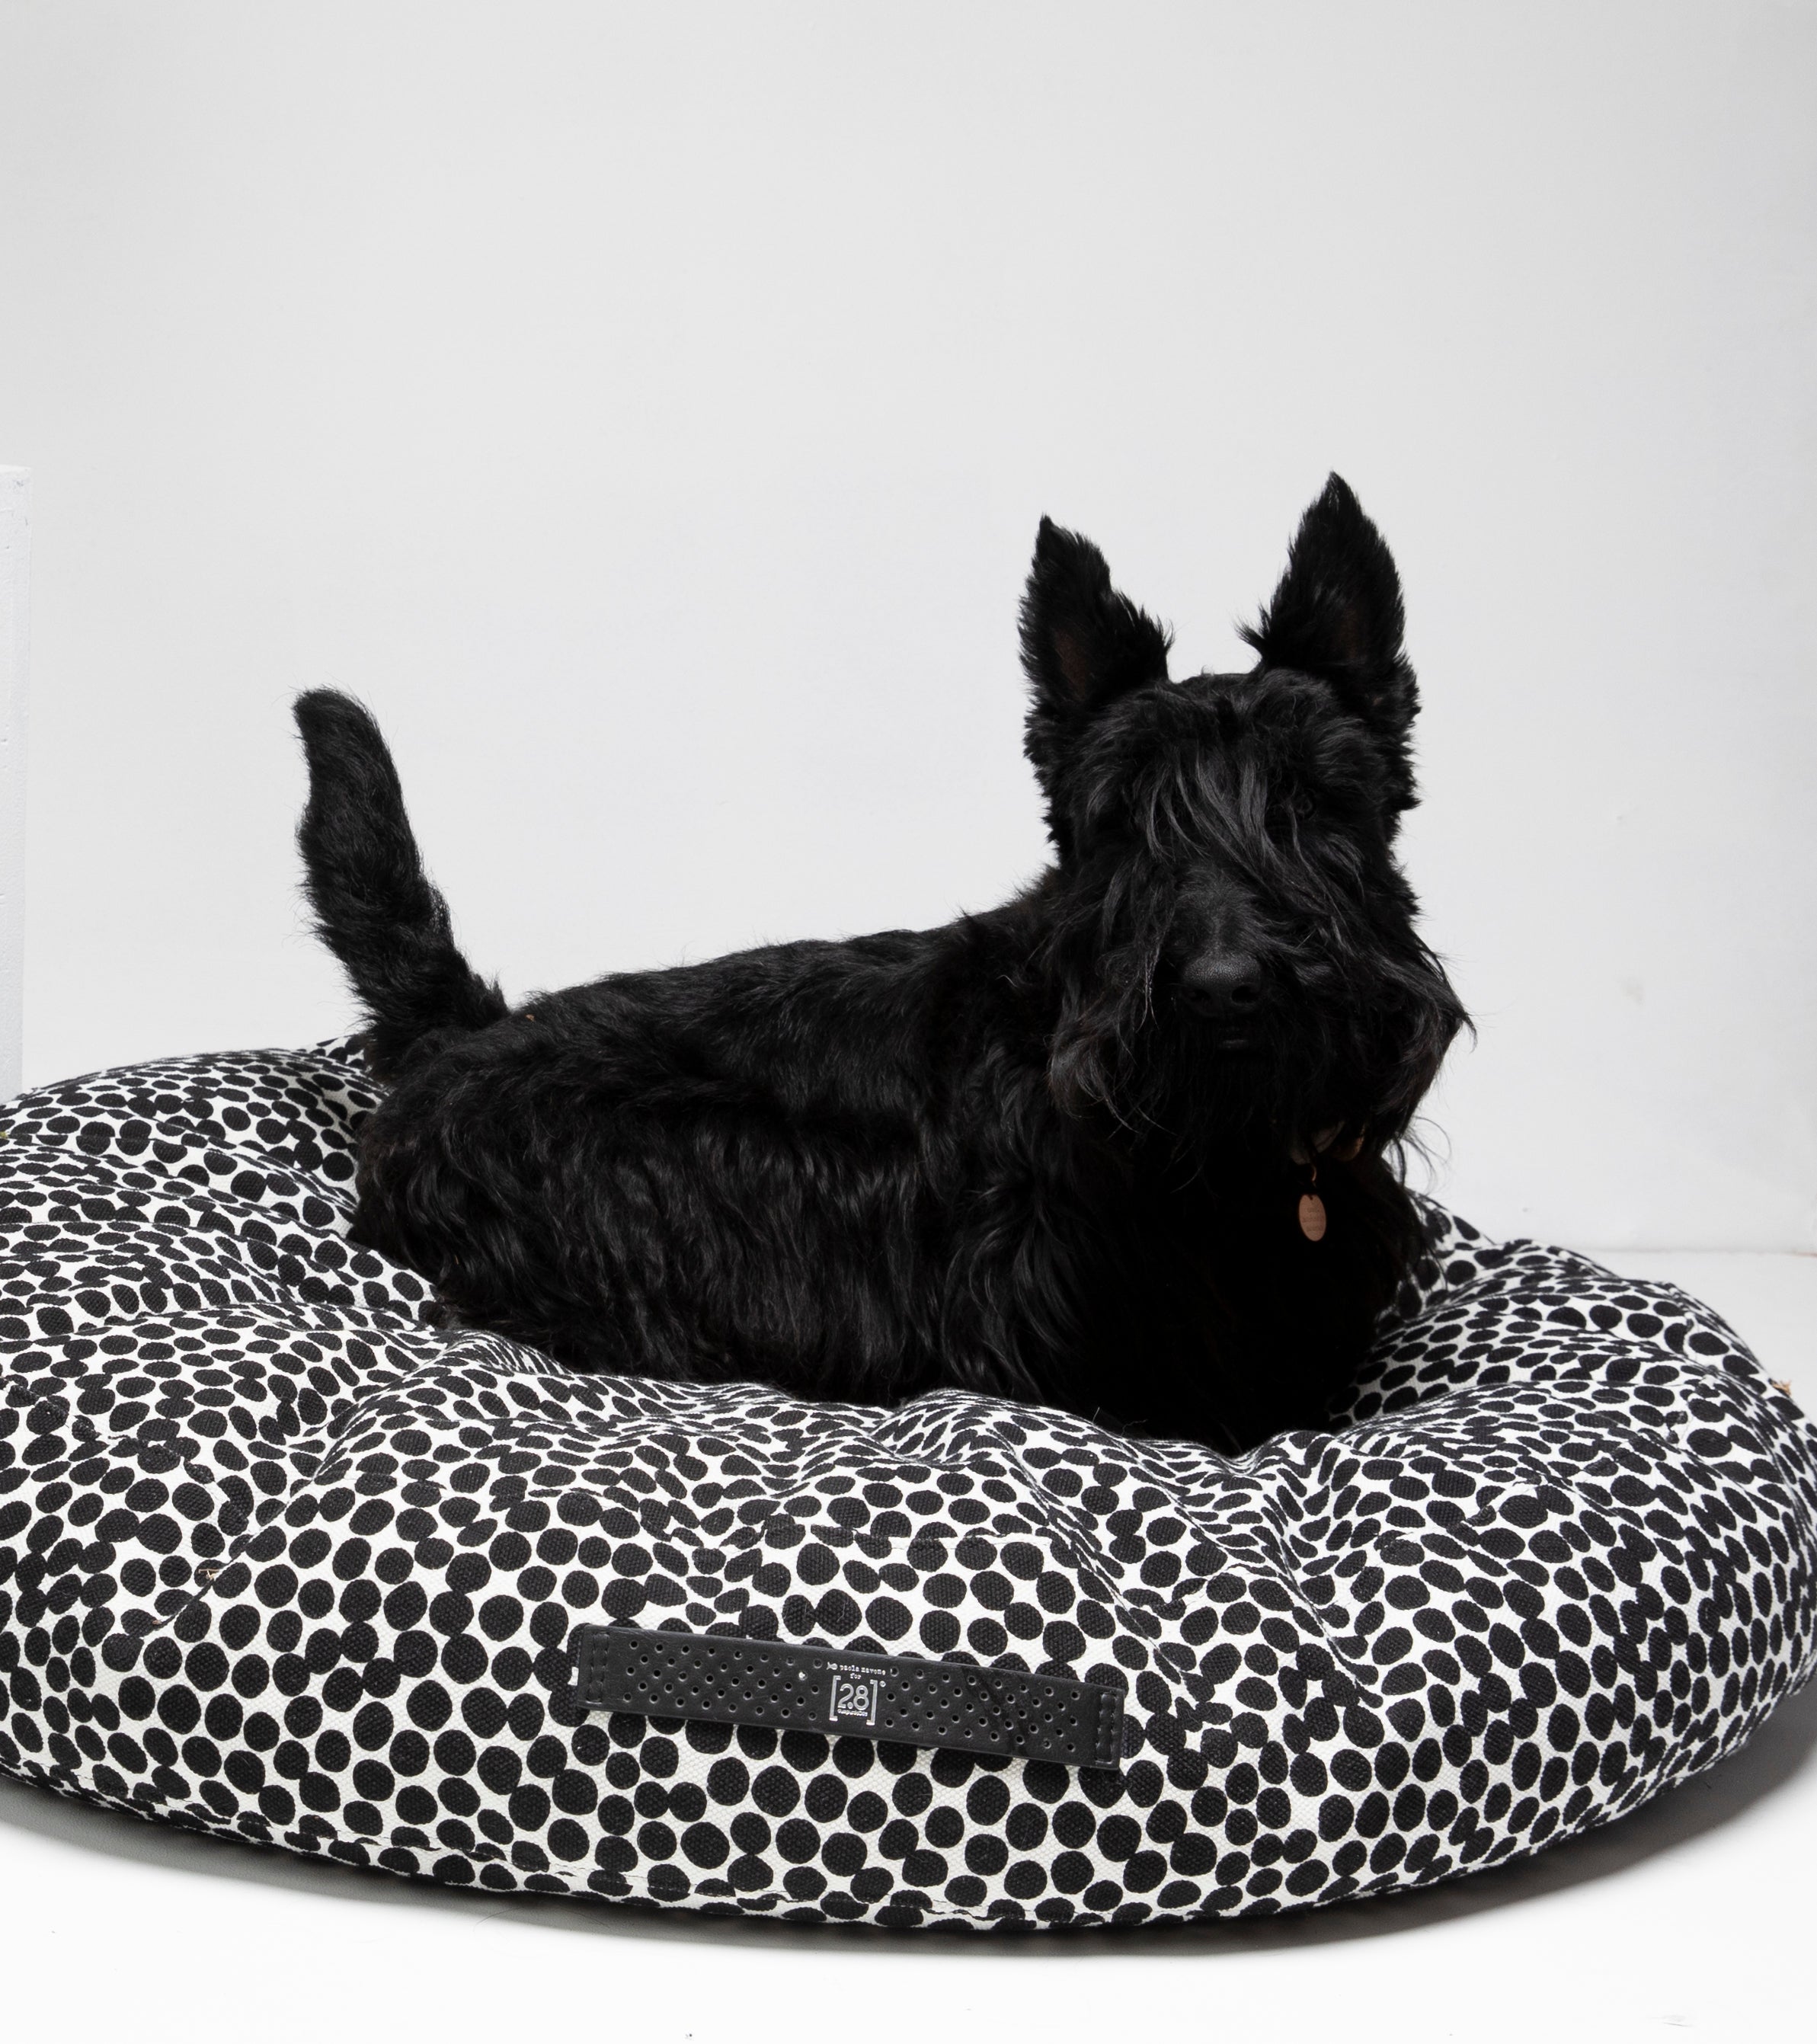 dotto-collection-paola-navone-dog-cushion-3.jpg